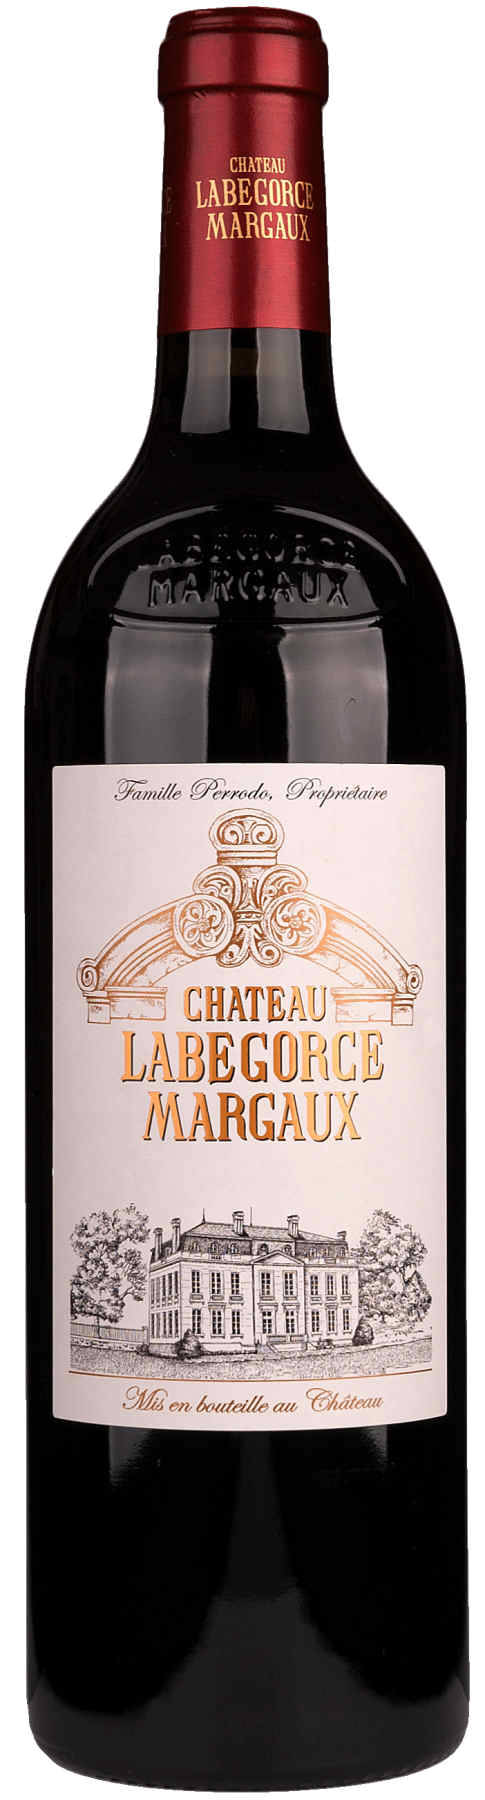 Chateau Labegorce Margaux Cru Bourgeois